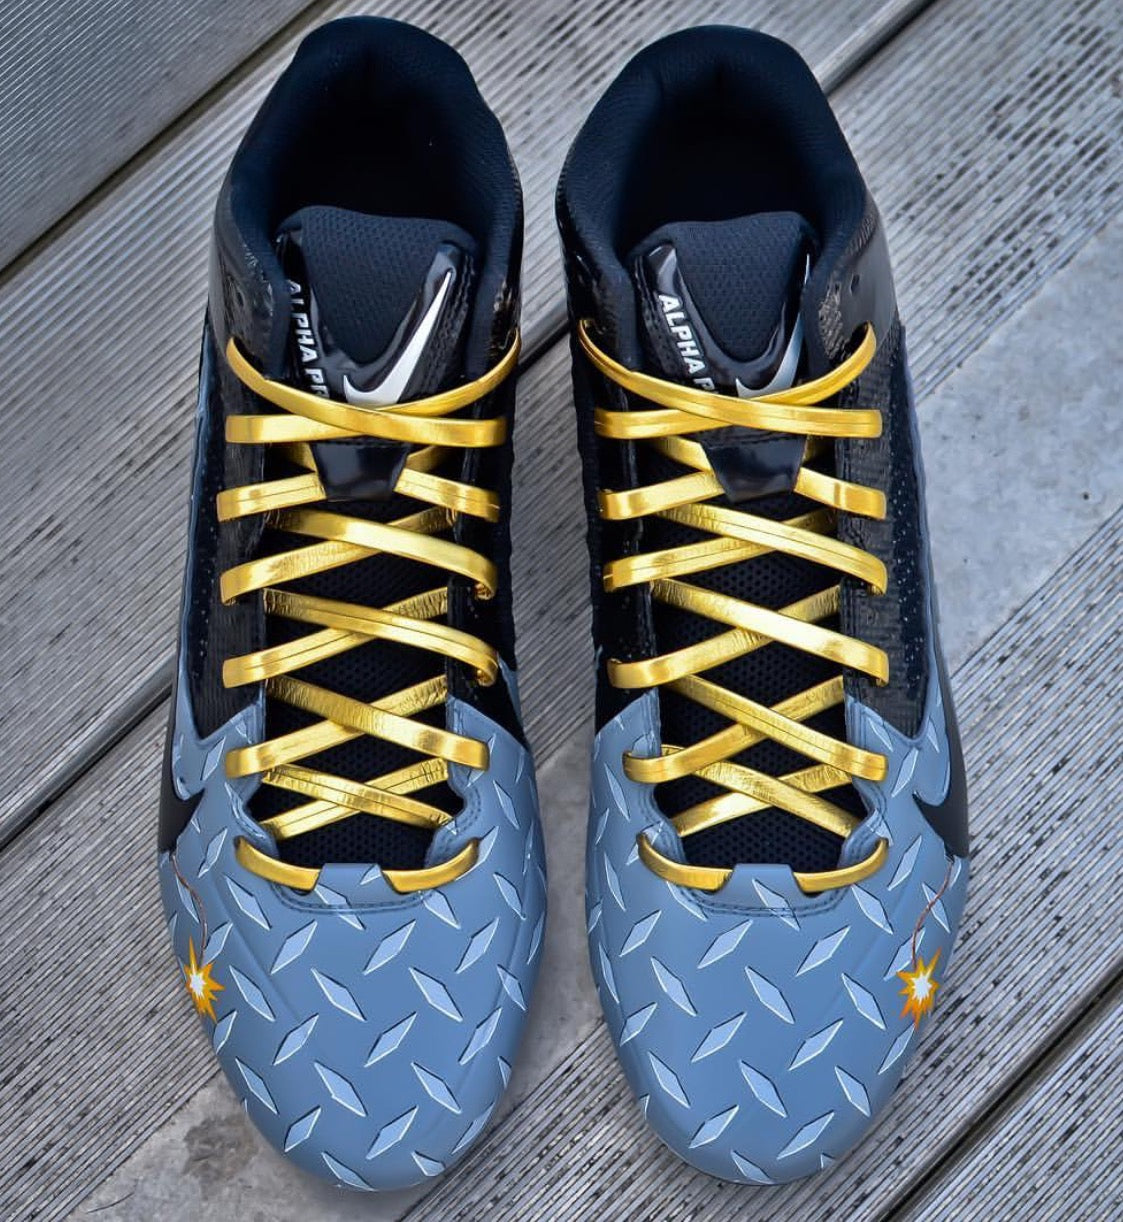 gold leather shoe laces